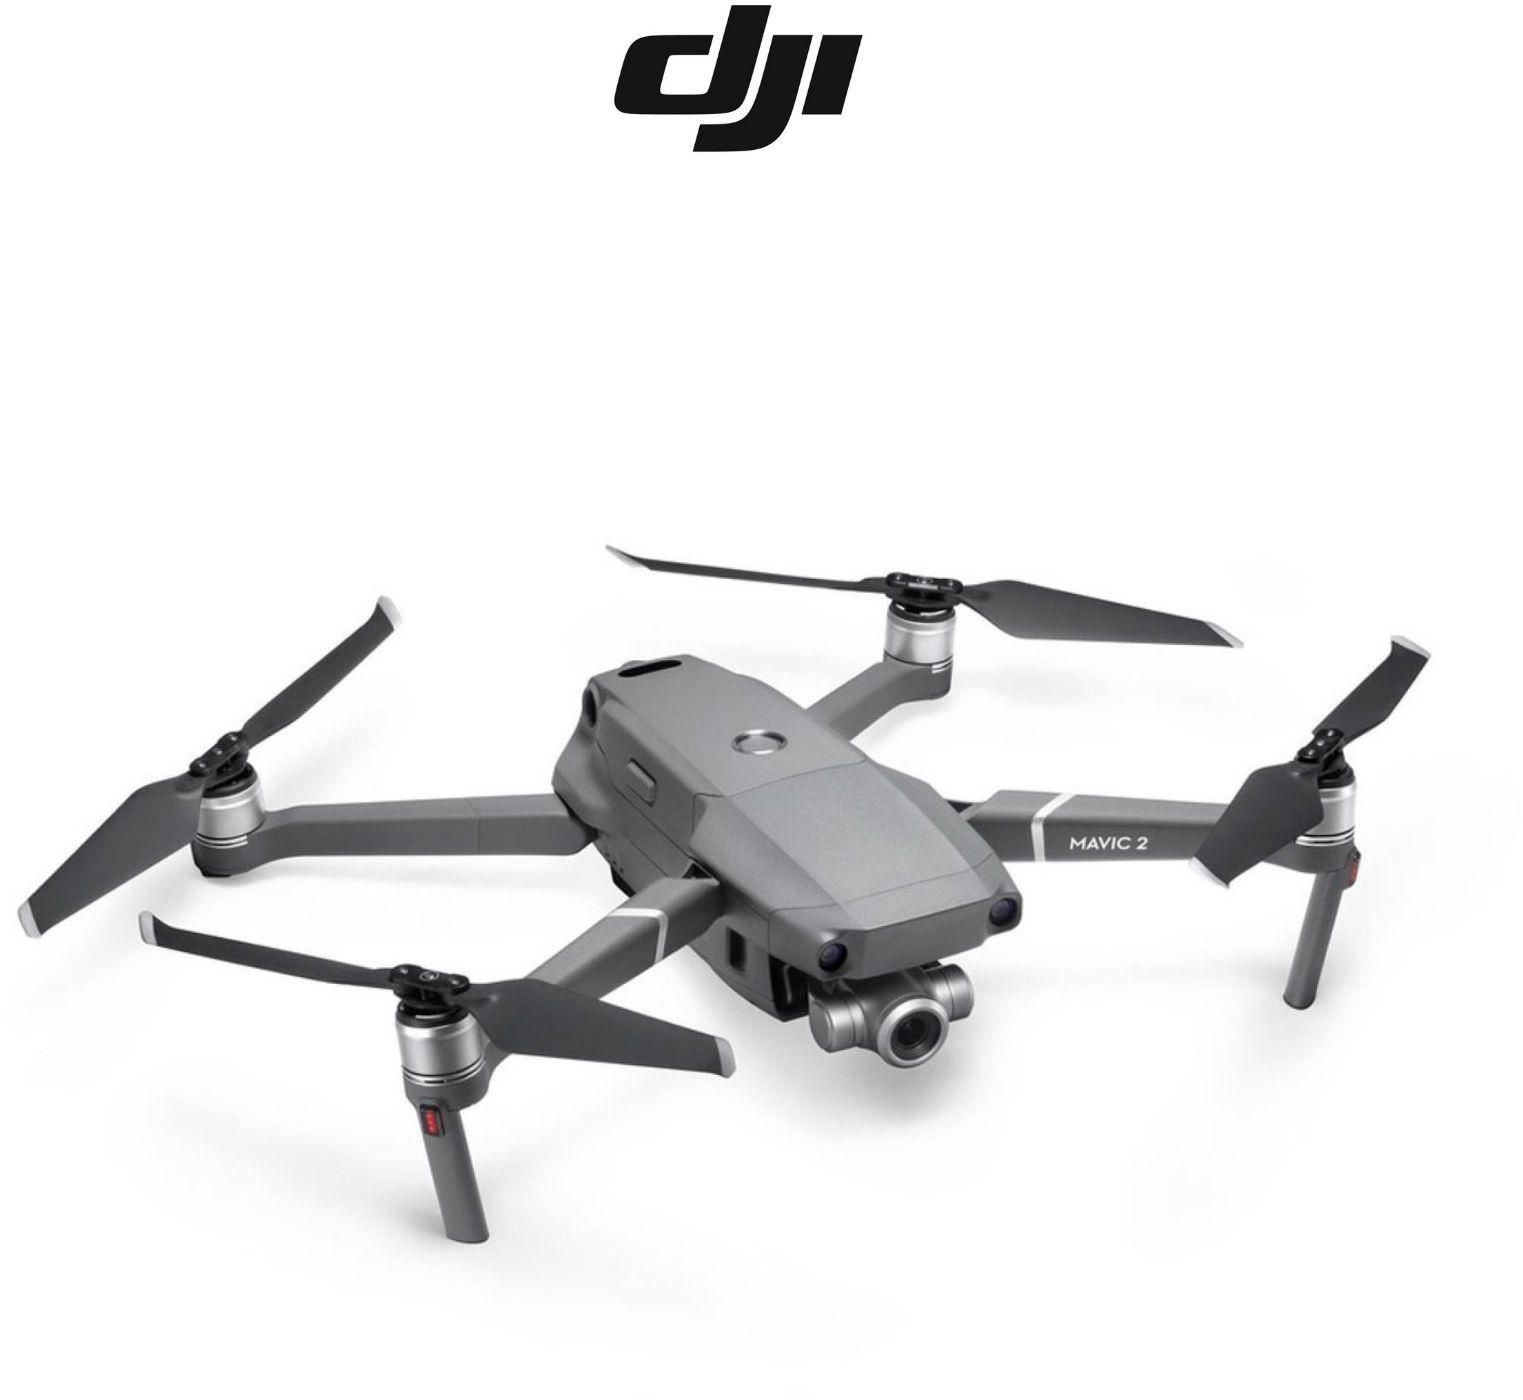 DJI Mavic 2 Zoom - 4K Professional Flexible Aerial Photography Drone